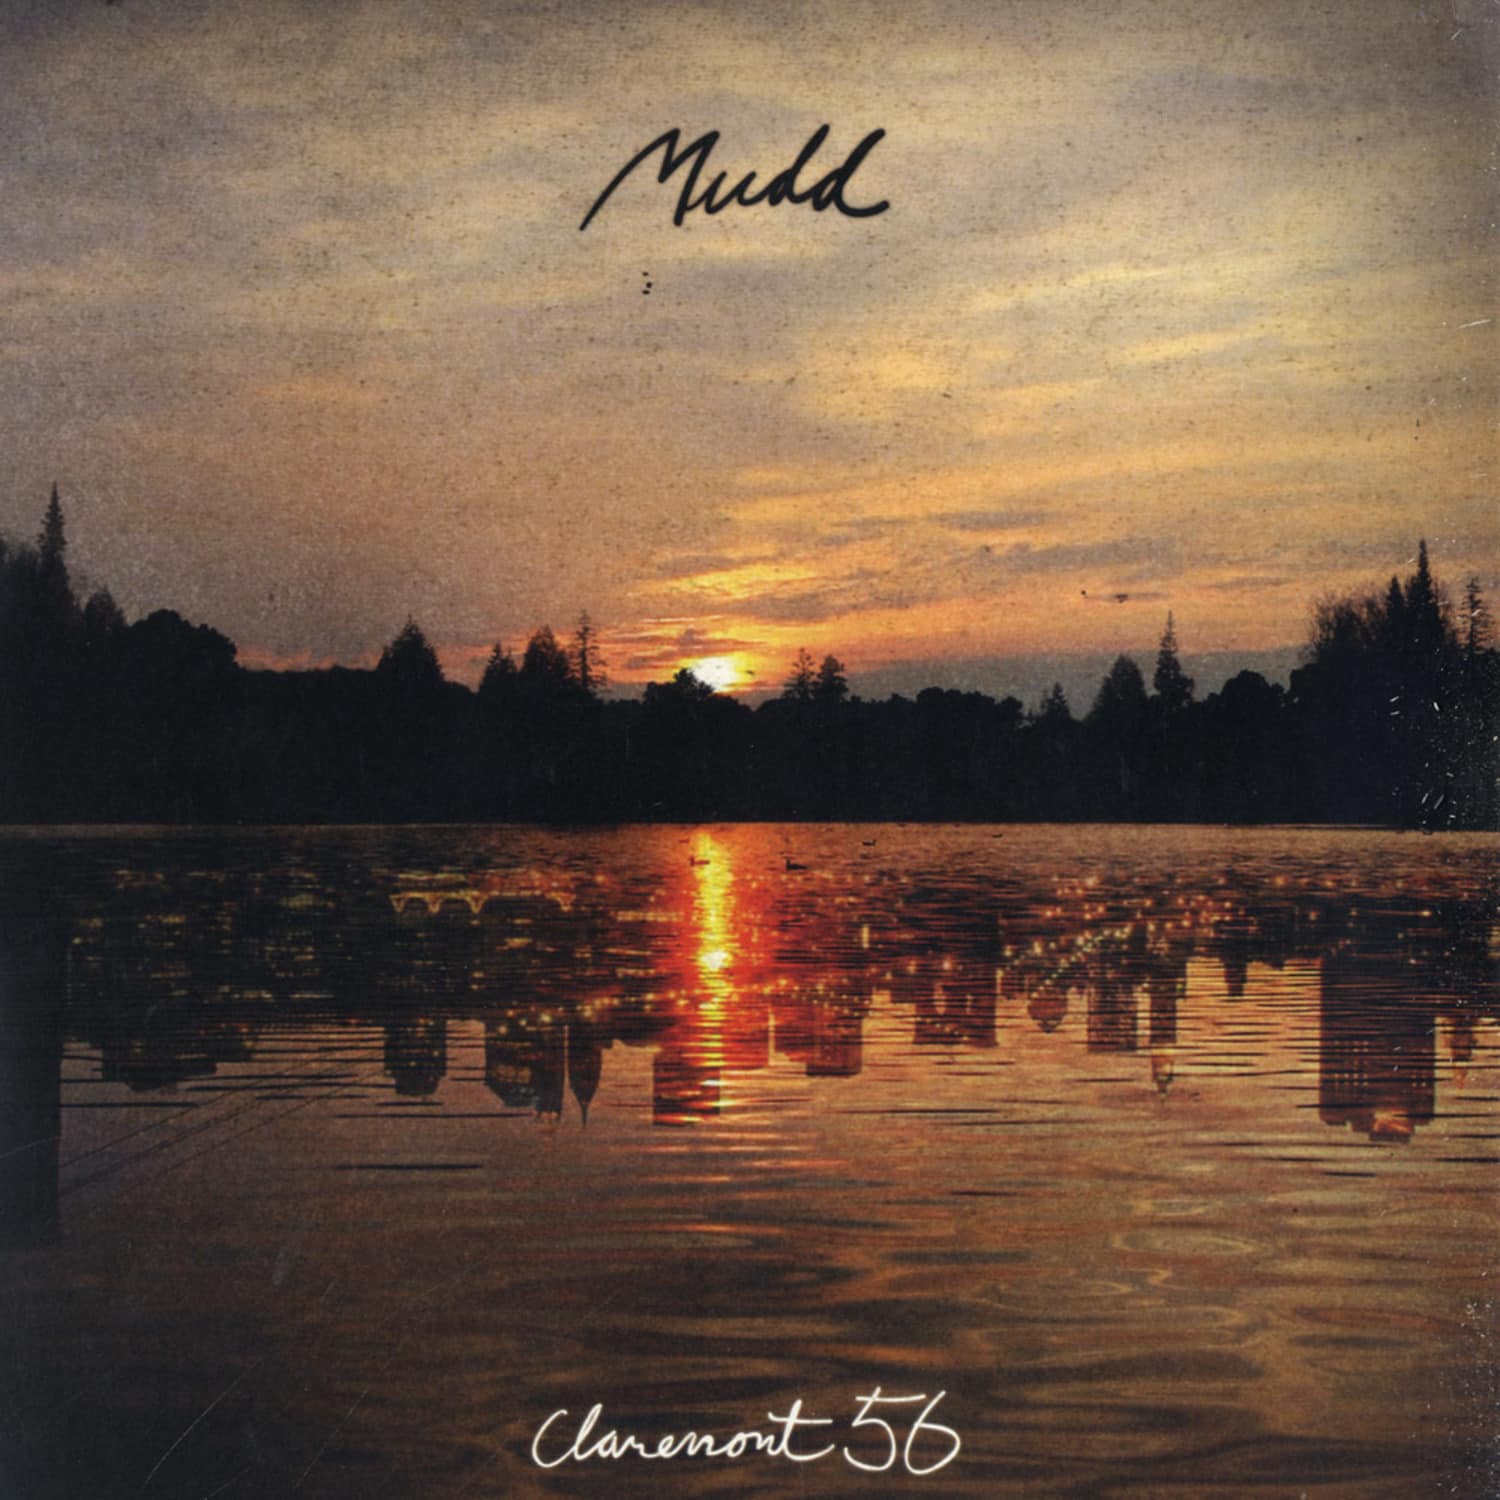 Mudd - CLAREMONT 56